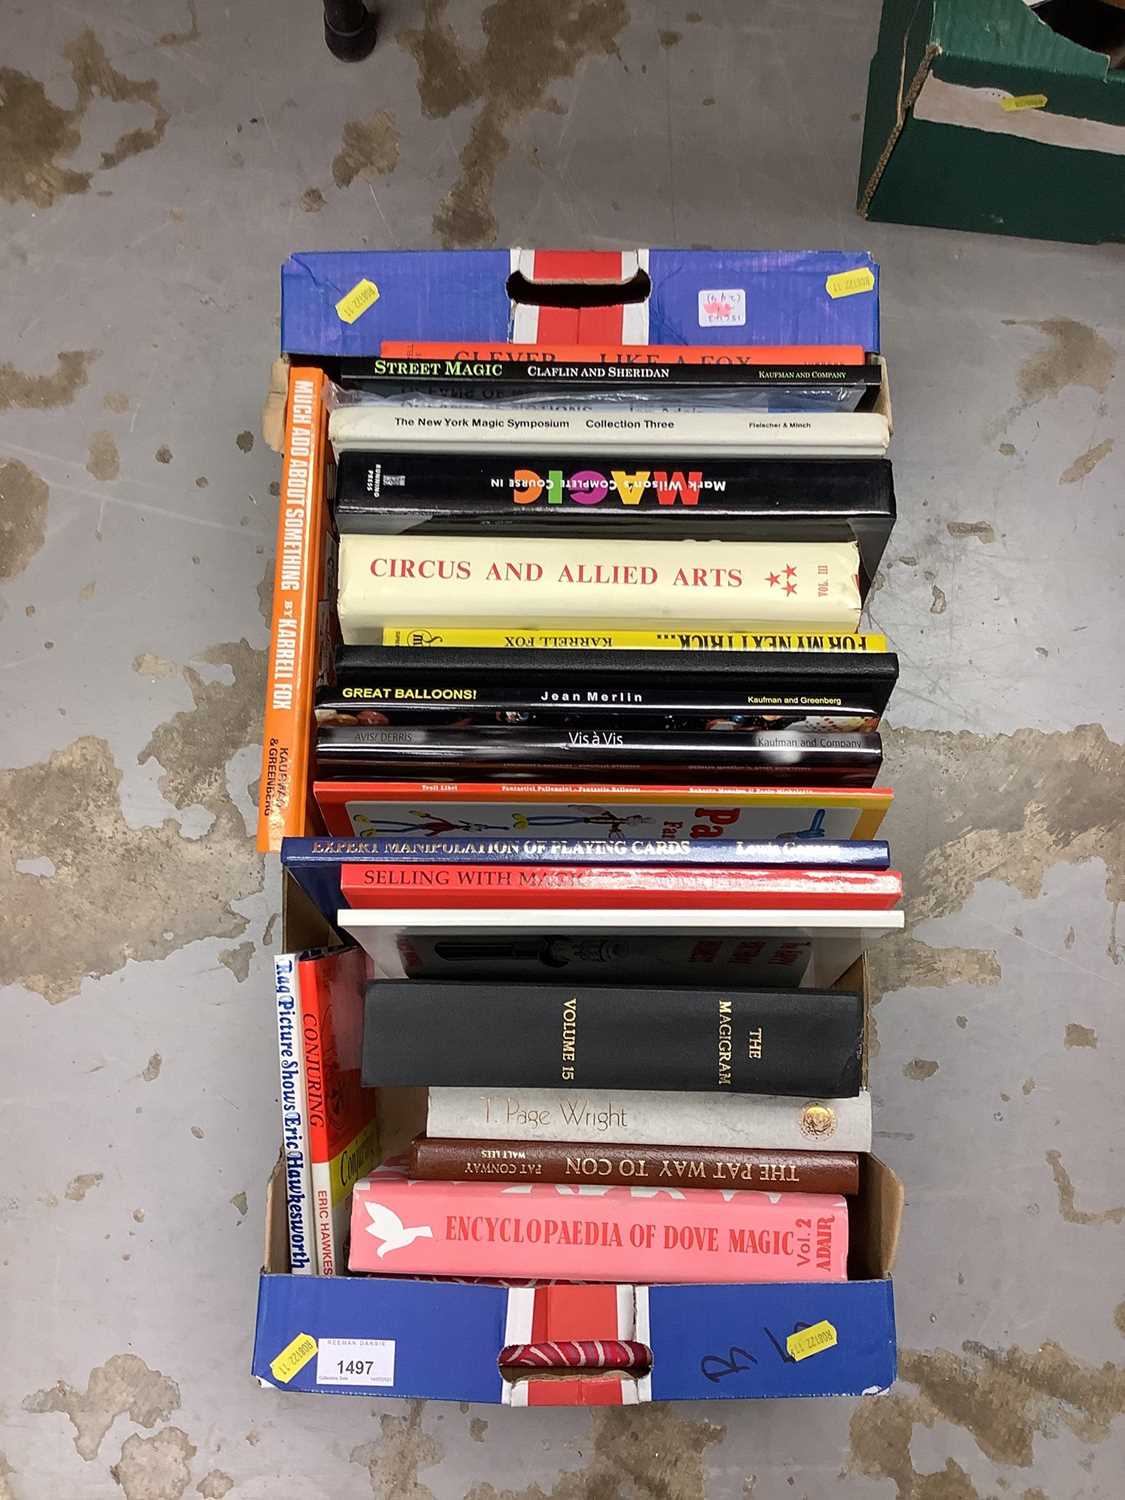 Lot 1497 - One box of various Magic Books